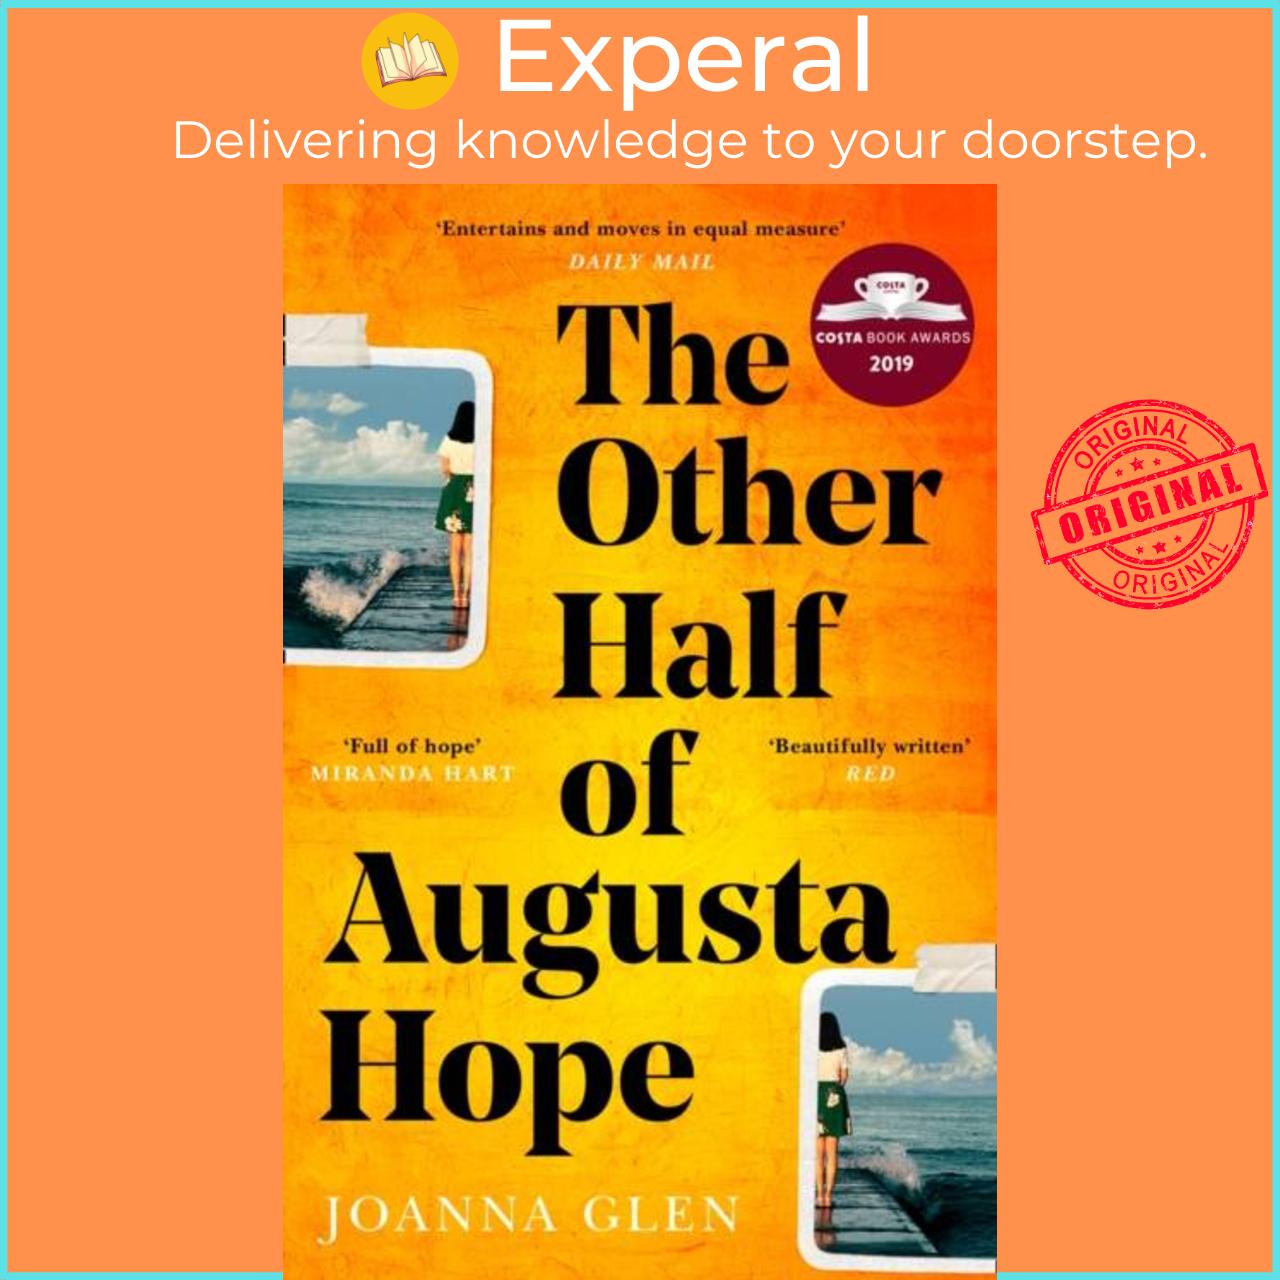 Hình ảnh Sách - The Other Half of Augusta Hope by Joanna Glen (UK edition, paperback)